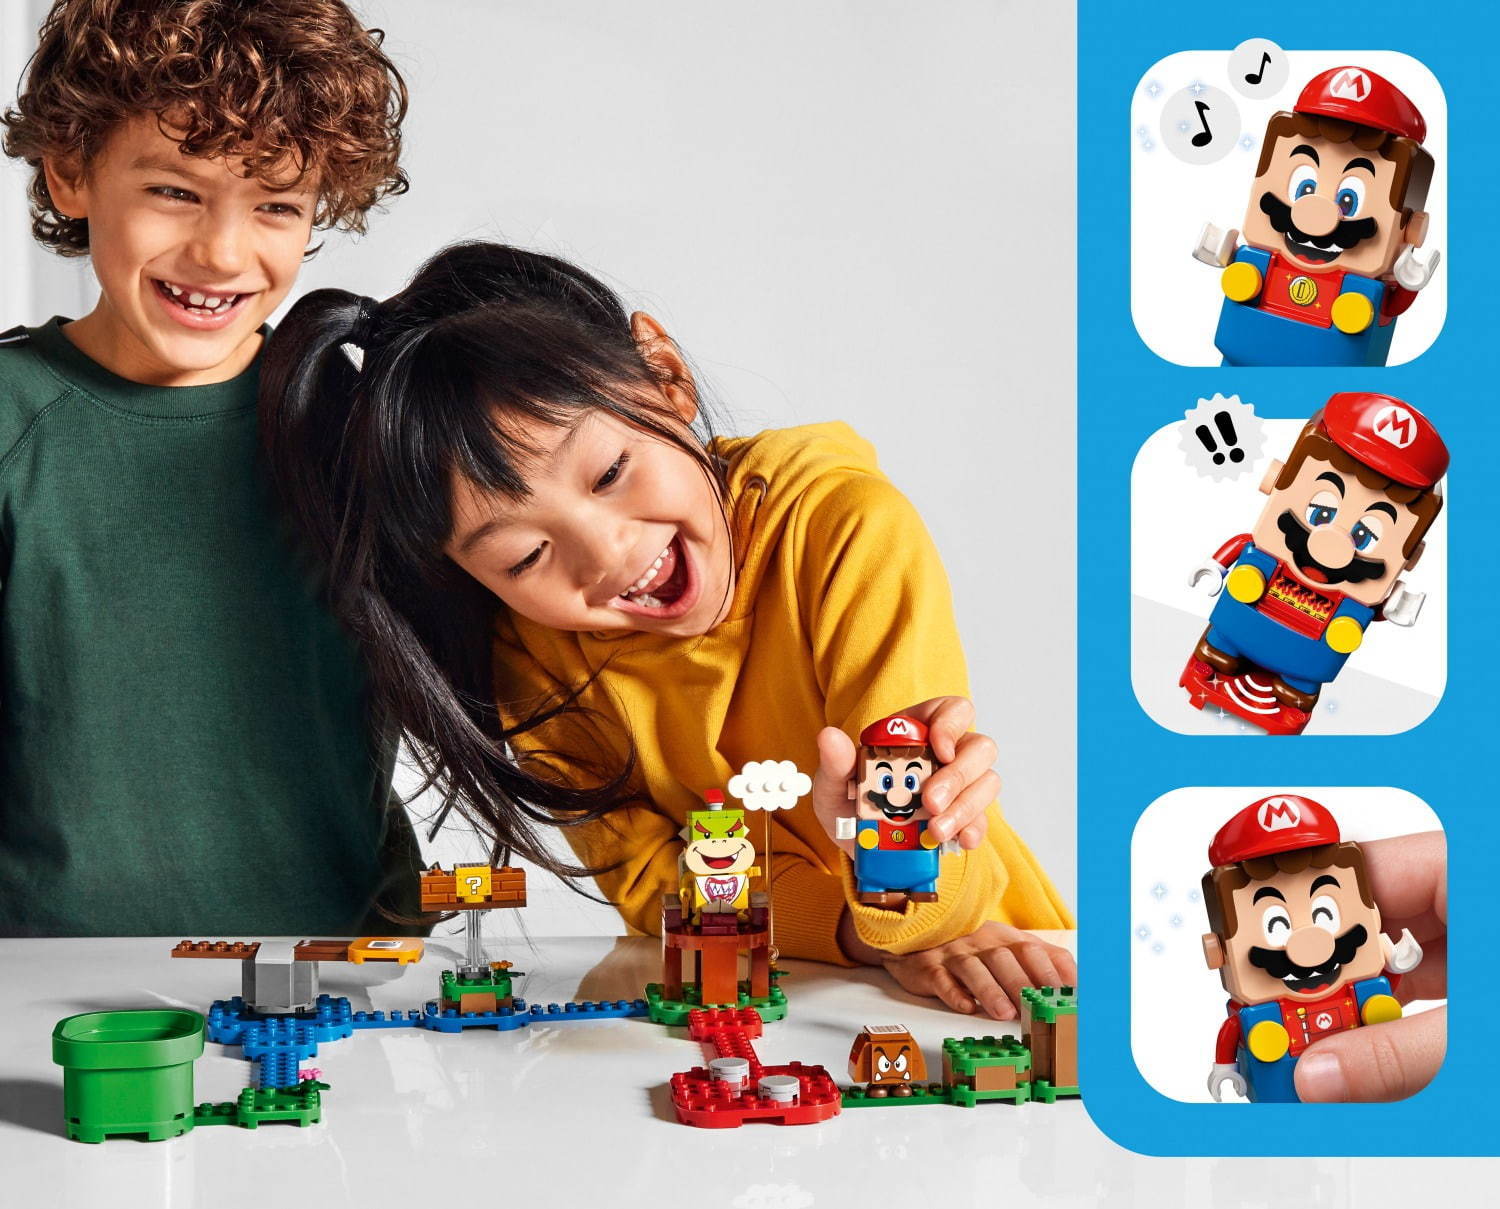 TM & © 2020 Nintendo. ©2020 The LEGO Group.